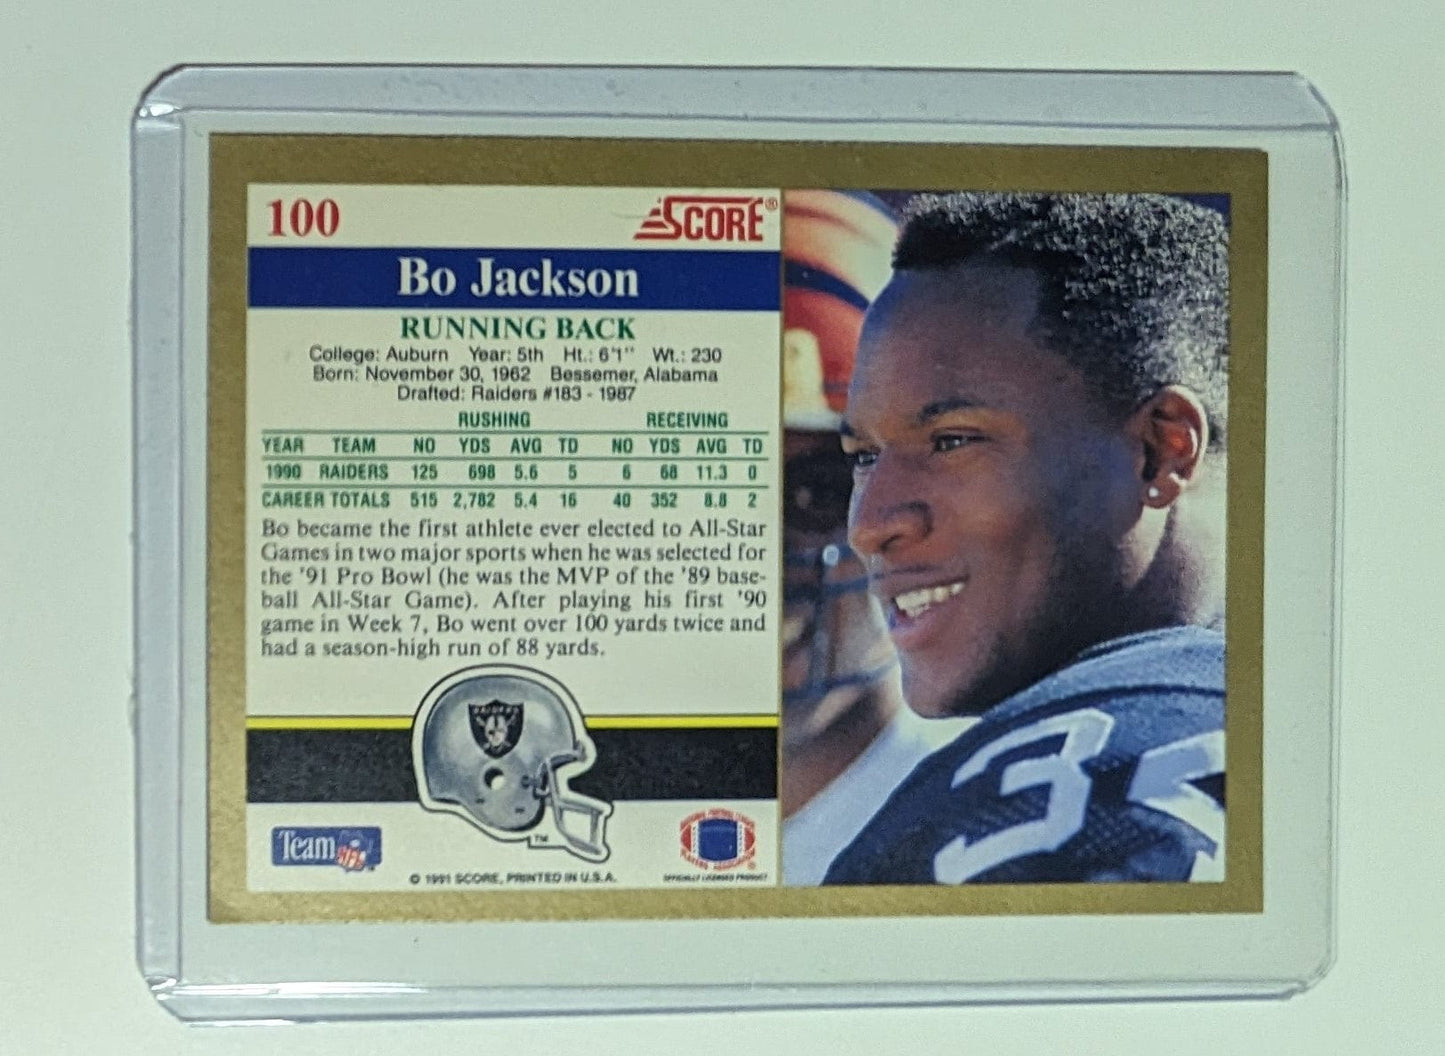 FIINR Football Card 1991 Score Bo Jackson Football Card #100 - Mint Condition